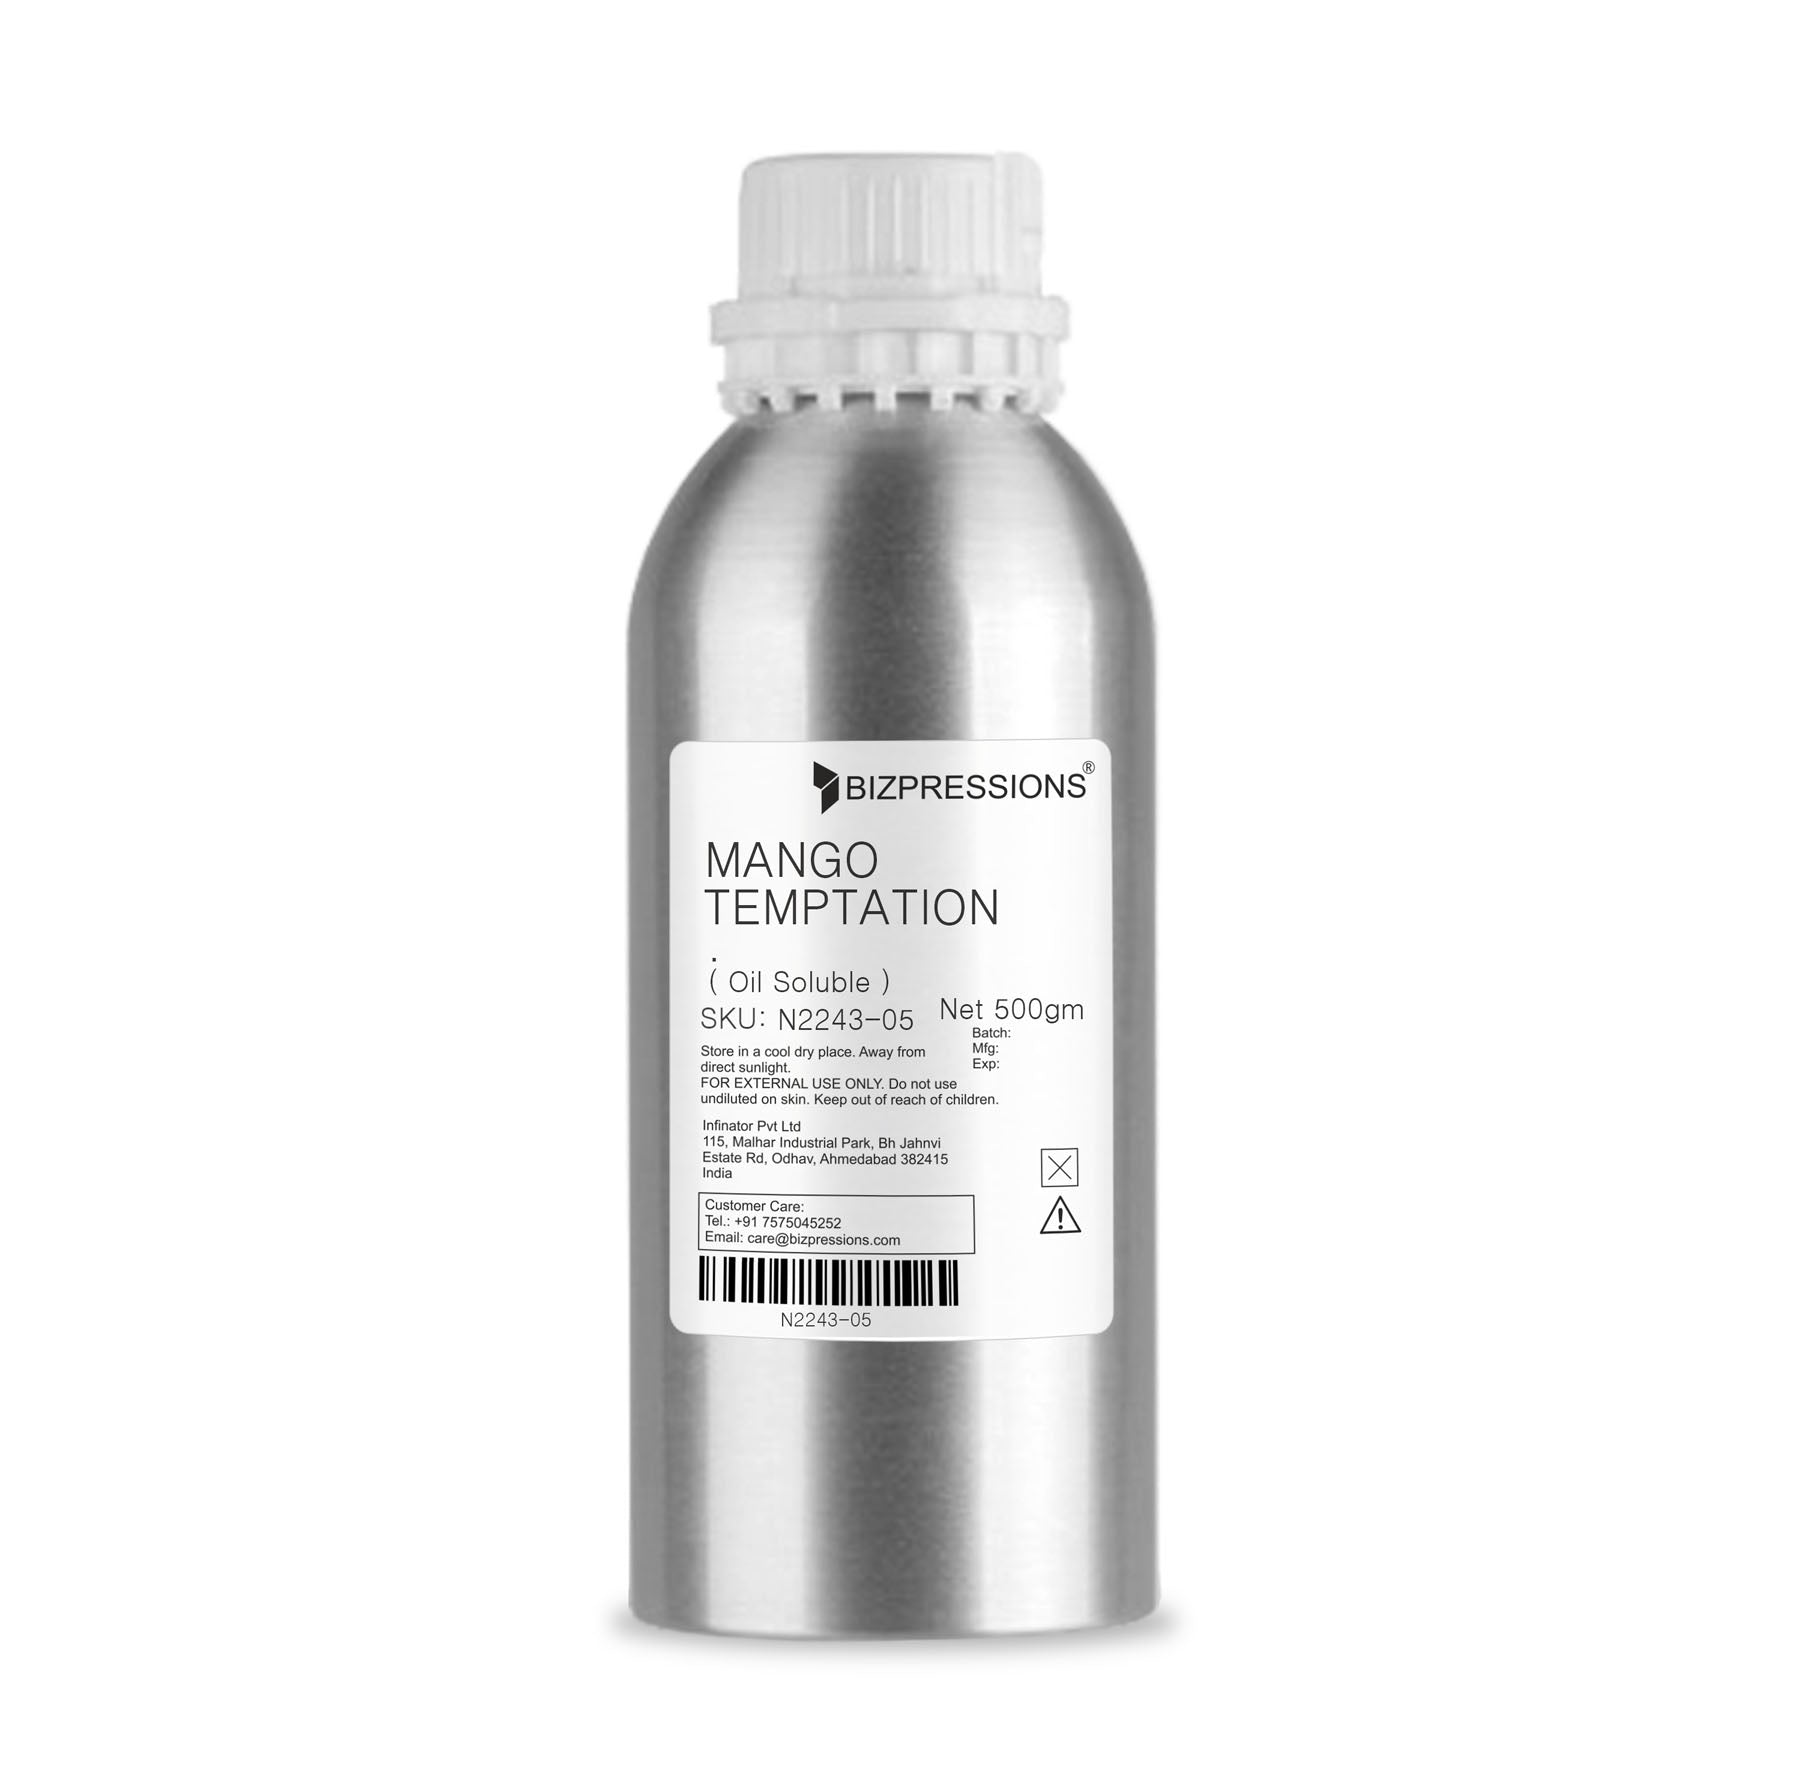 MANGO TEMPTATION - Fragrance ( Oil Soluble ) - 500 gm